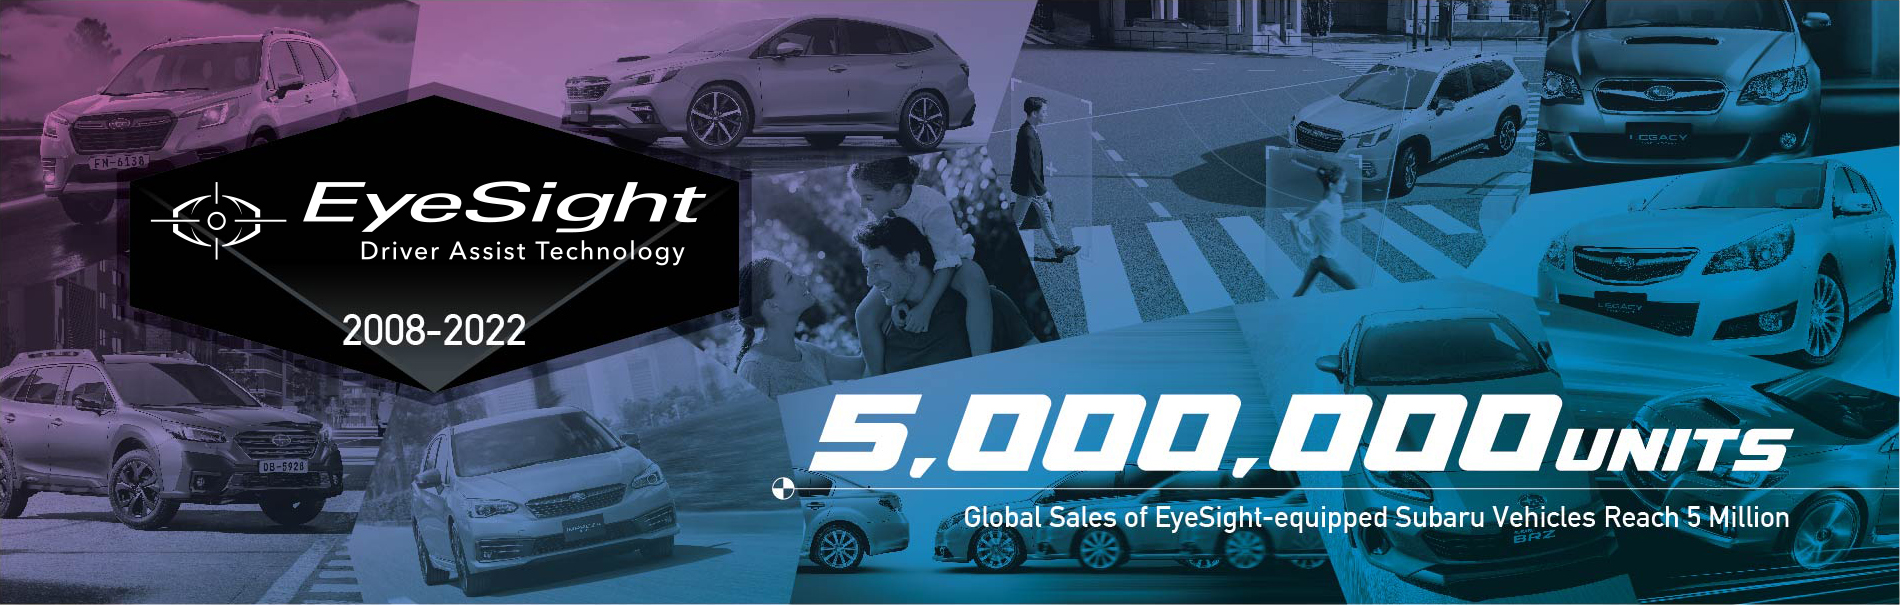 Subaru Achieves Global Sales of 5 Million EyeSight-equipped Vehicles